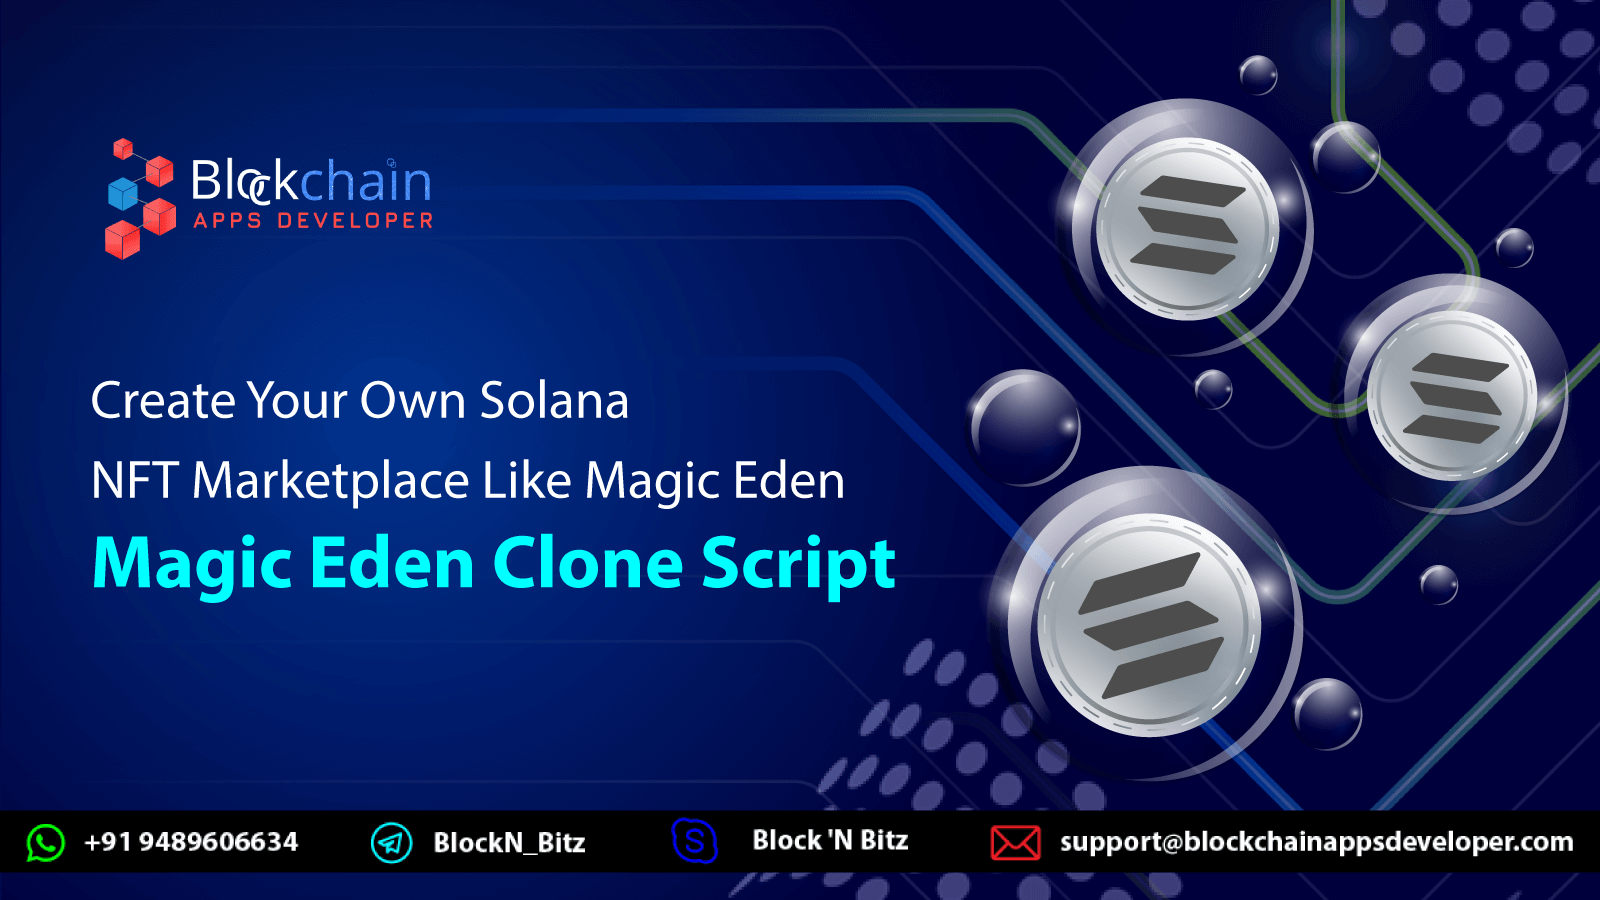 Create Your Own Solana NFT Marketplace With Magic Eden Clone Script